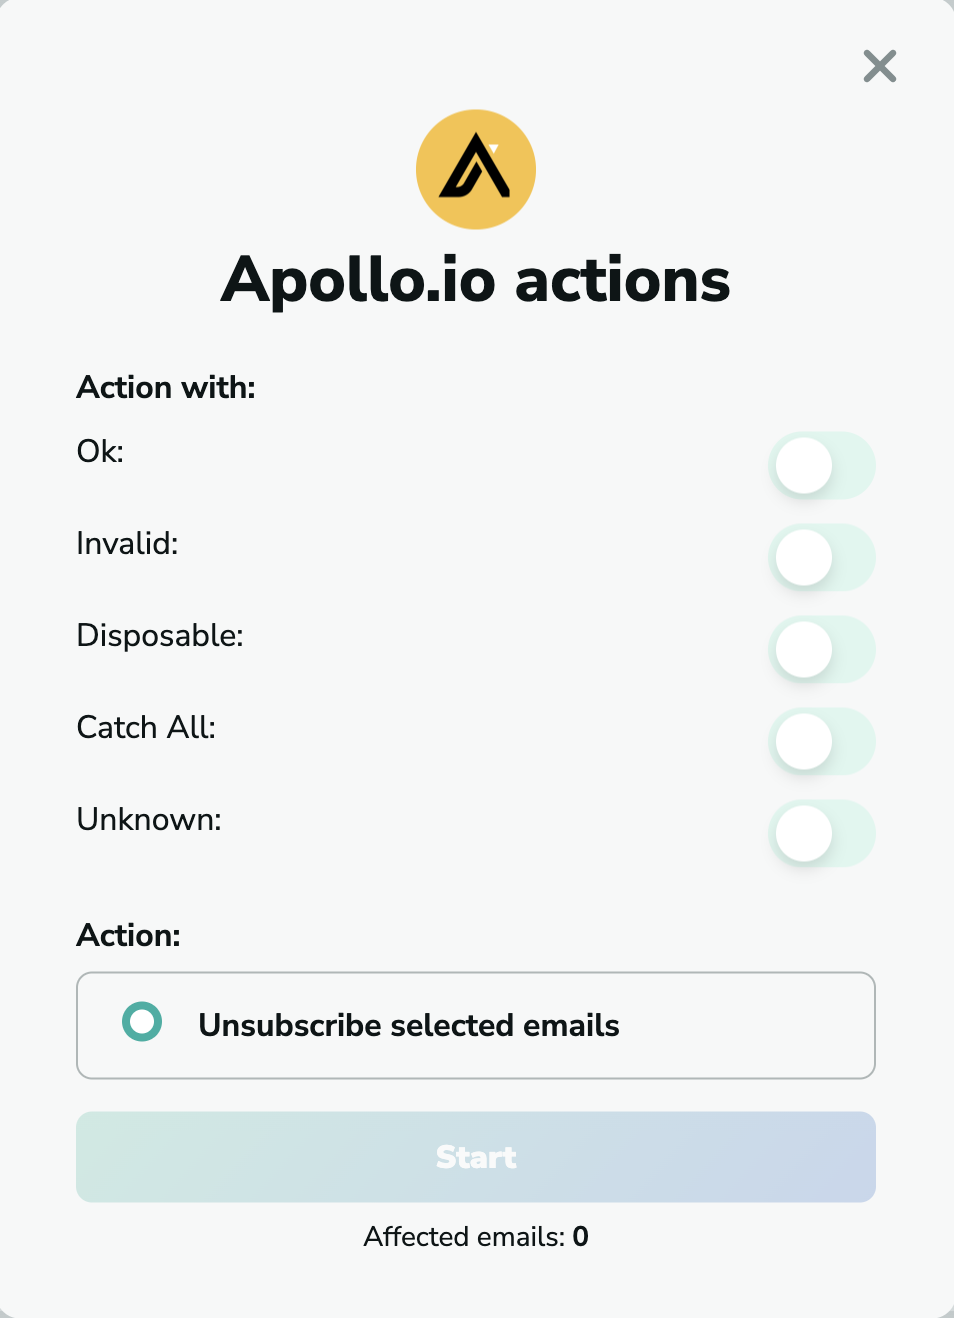 Apollo.io actions in MillionVerifier